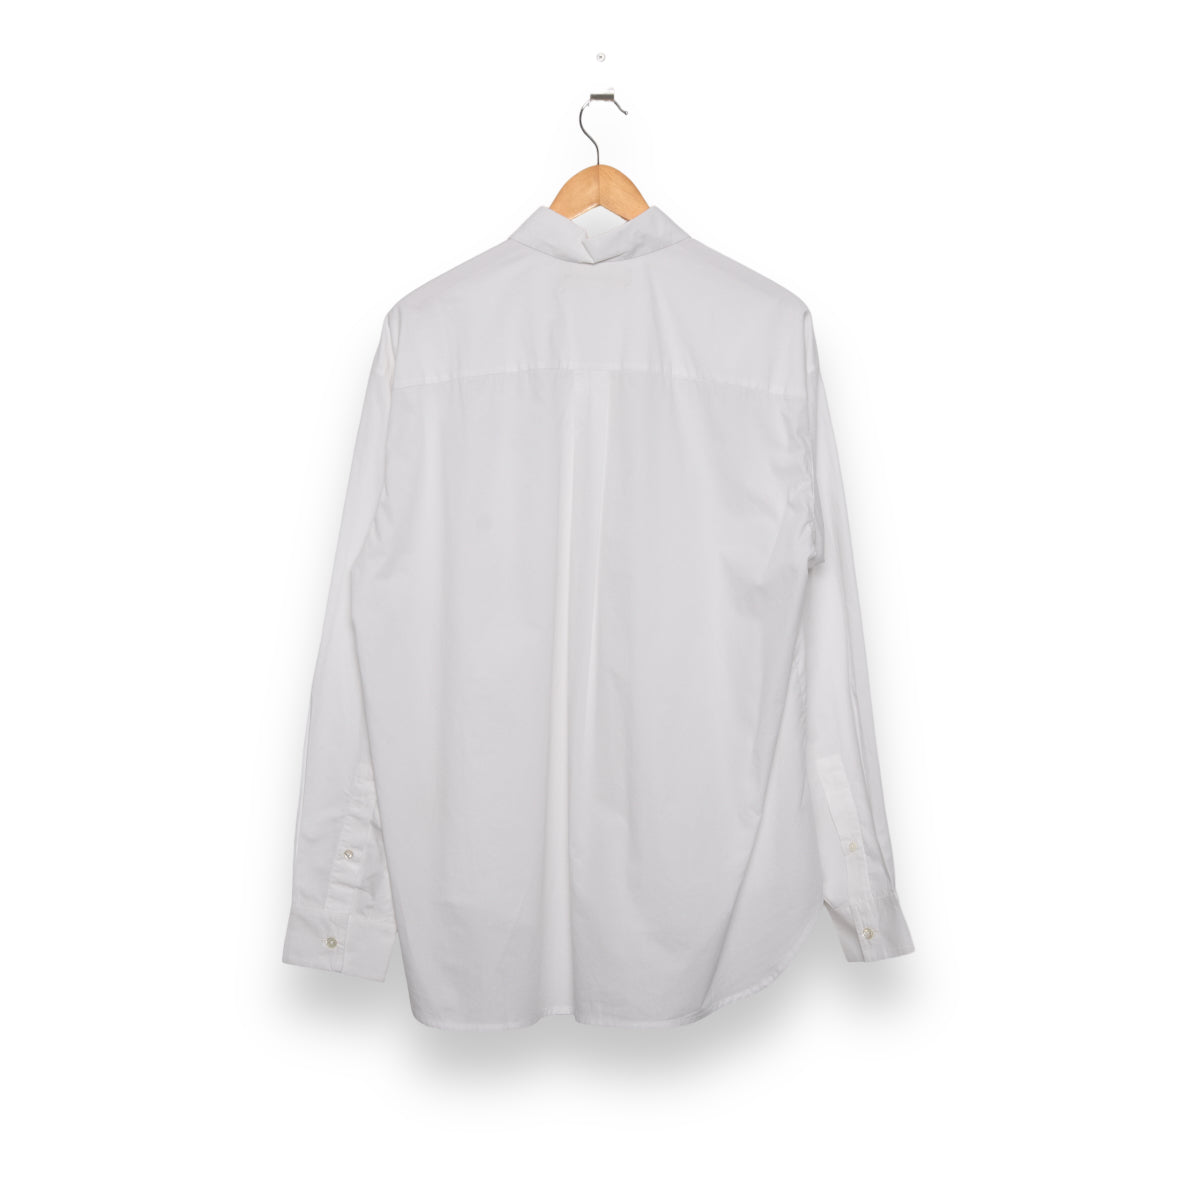 Jan Machenhauer Christopher Oversize Shirt poplin/white